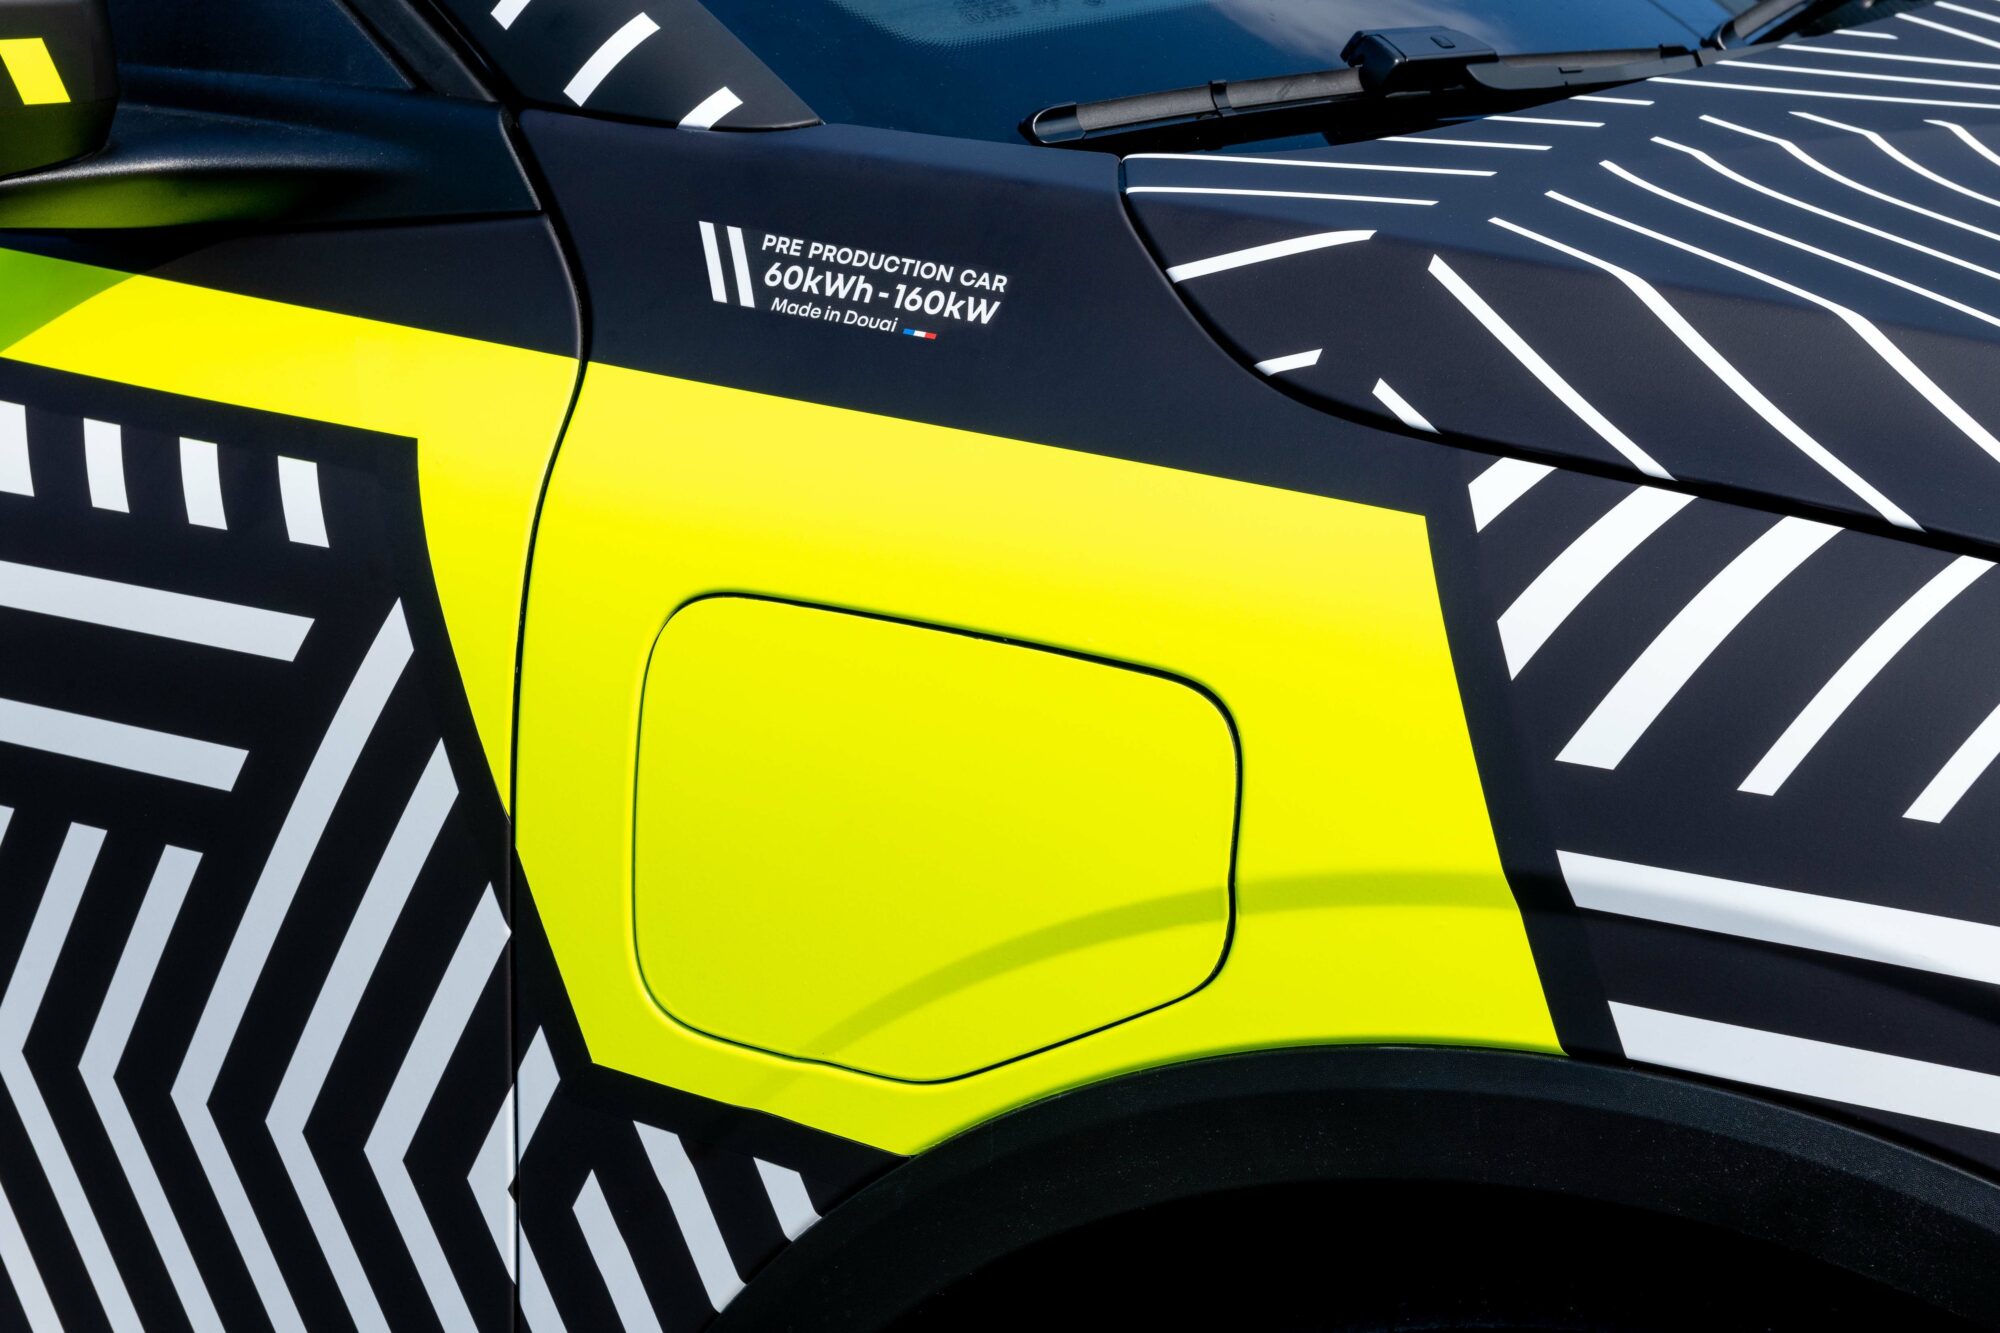 2021 - New Renault MEGANE E-TECH Electric pre-production.jpeg